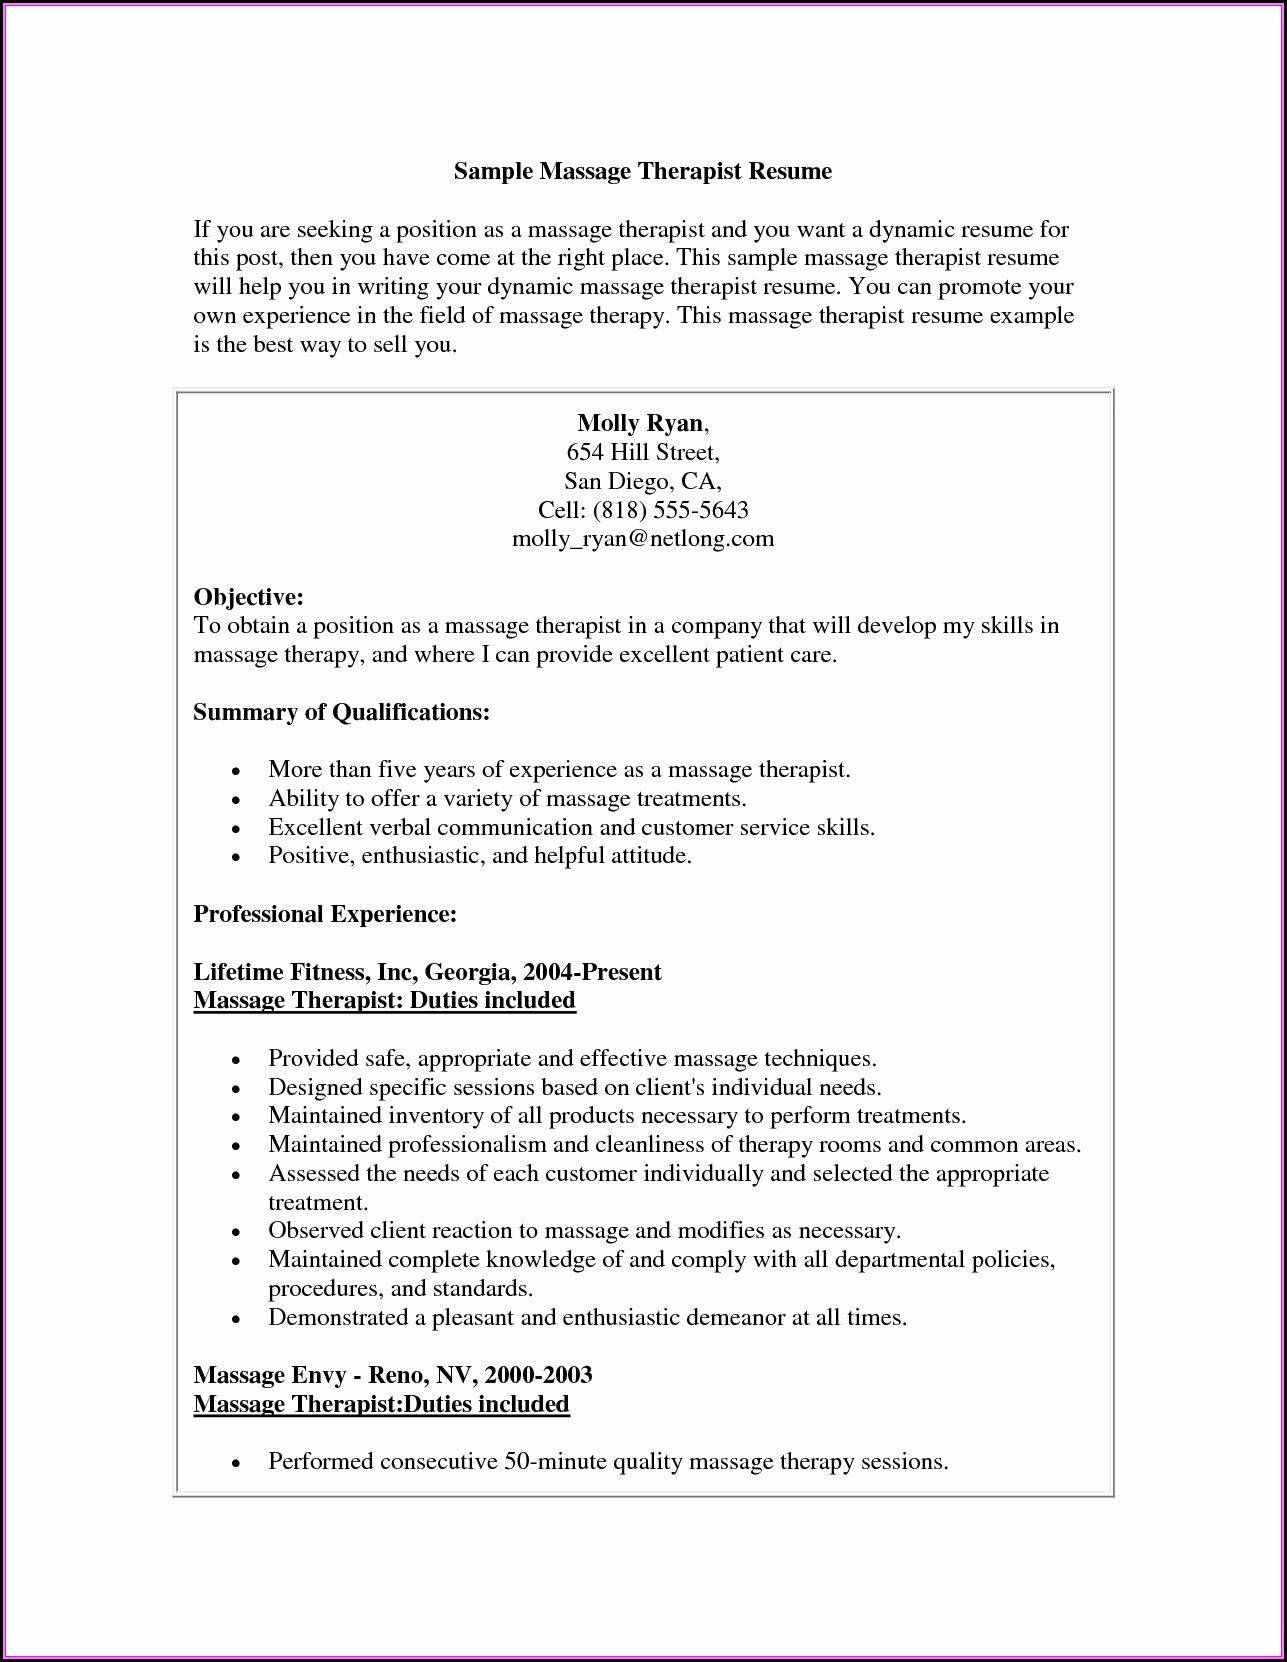 Massage Therapist Resume Objective